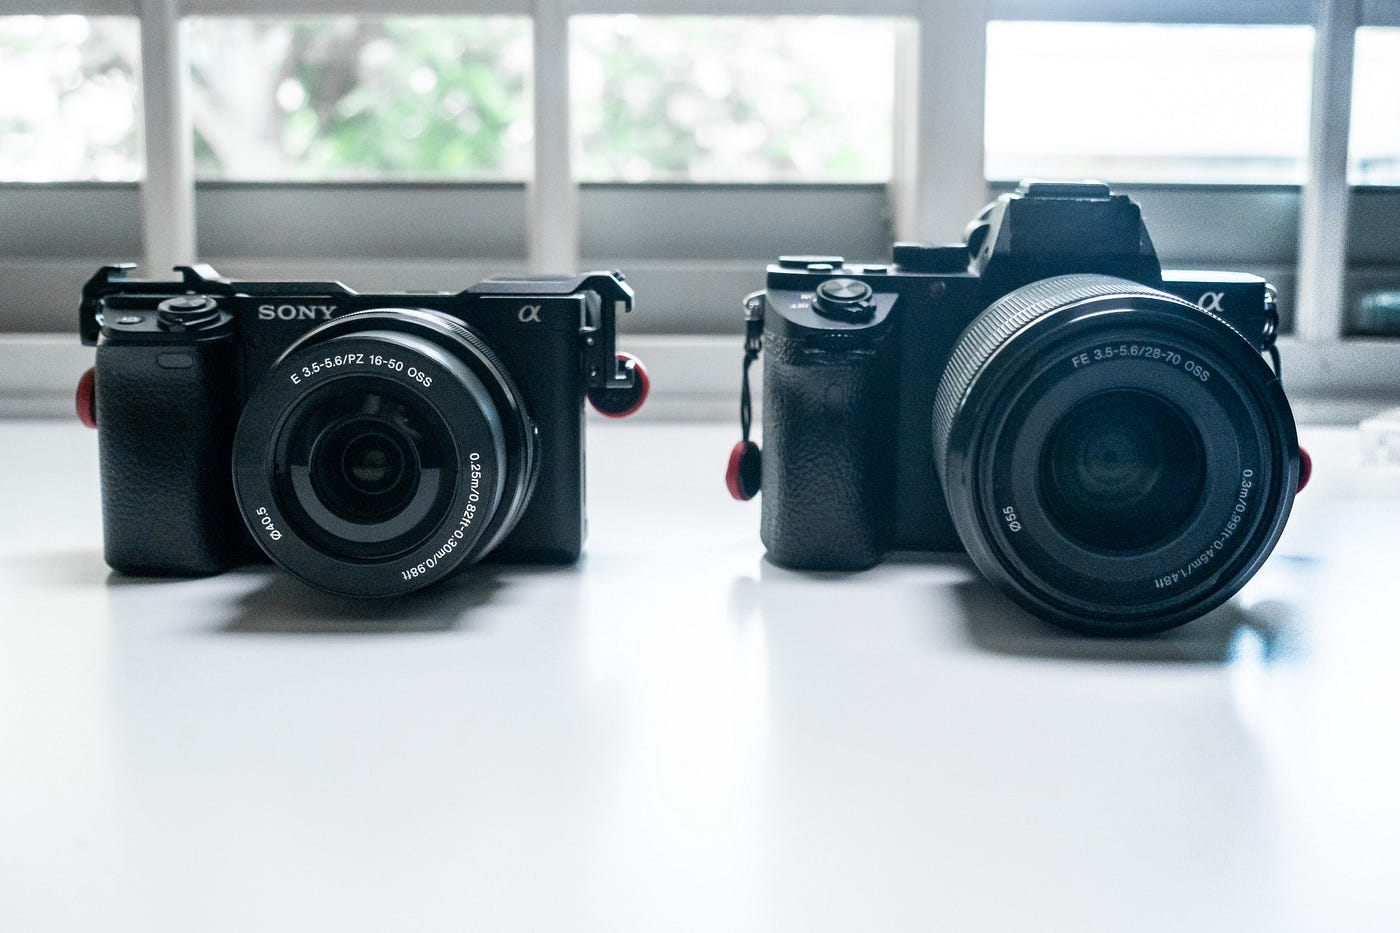 Full Frame VS APS-C Crop Cameras (Sony A7II vs A6400)